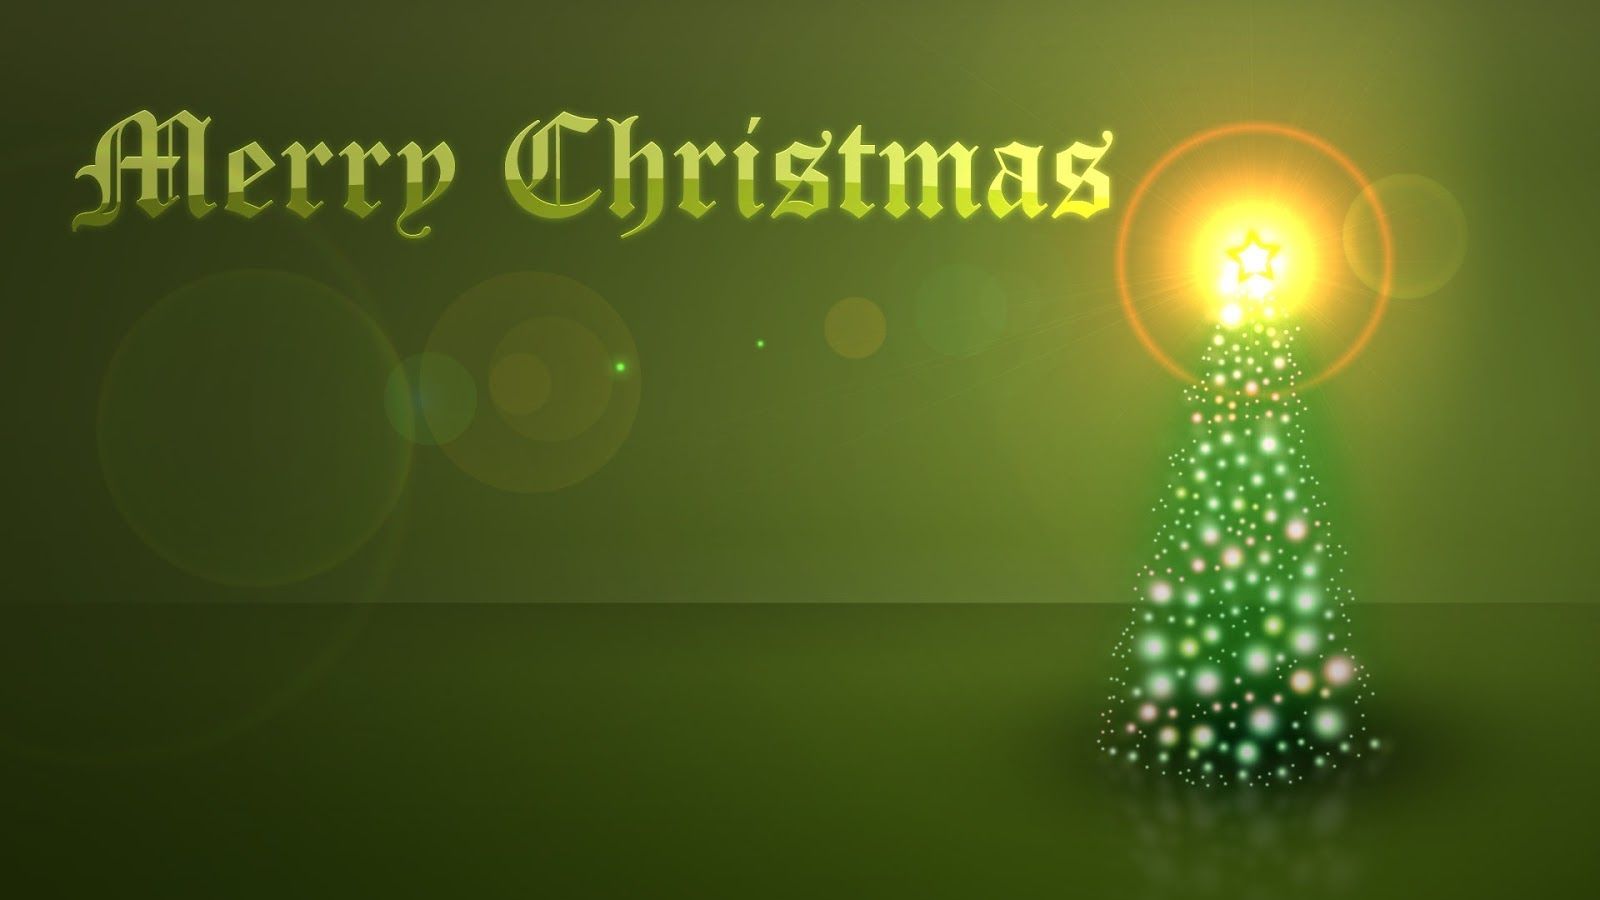 Happy Christmas Full HD 50 Wallpaper 1920x1080 Wallpaper 5k, 4k and 8k Ultra HD, UHD. Merry christmas wallpaper, Christmas vinyl, Animated christmas tree